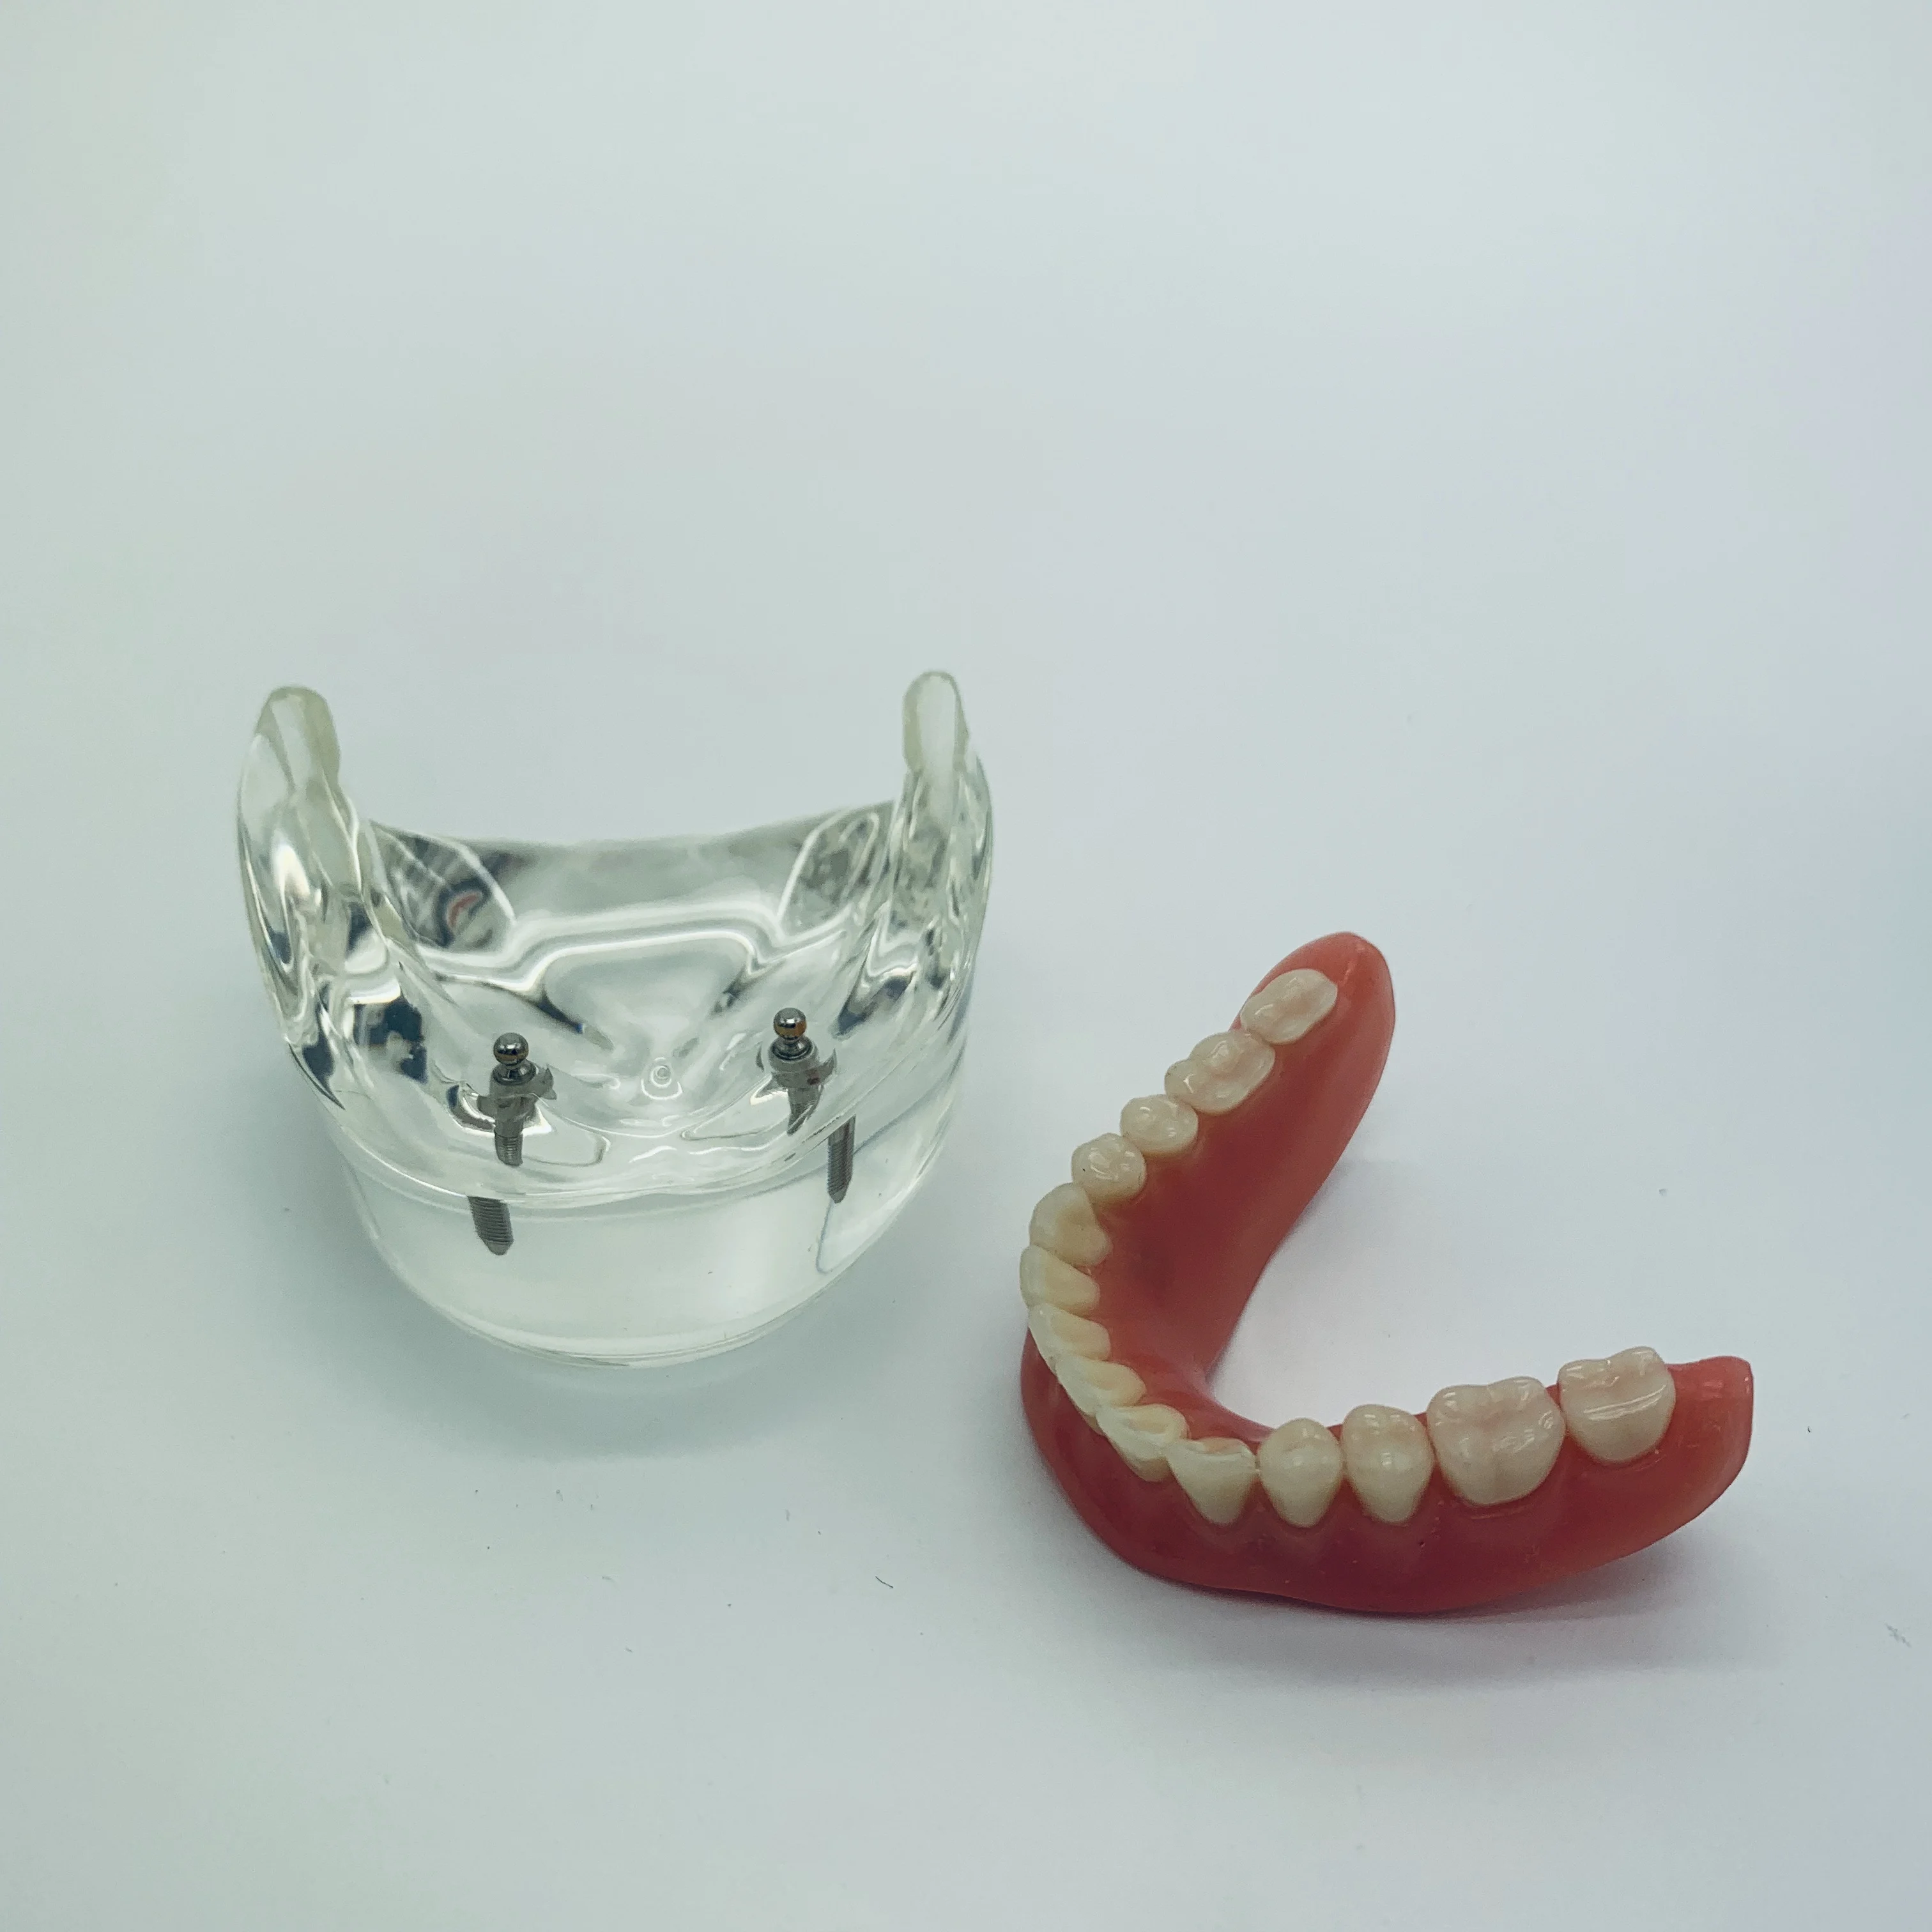 

Clinic Decoration Dental Overdenture Interior Mandibular Lower with 2 Implant Restoration Teeth Study Teach Model